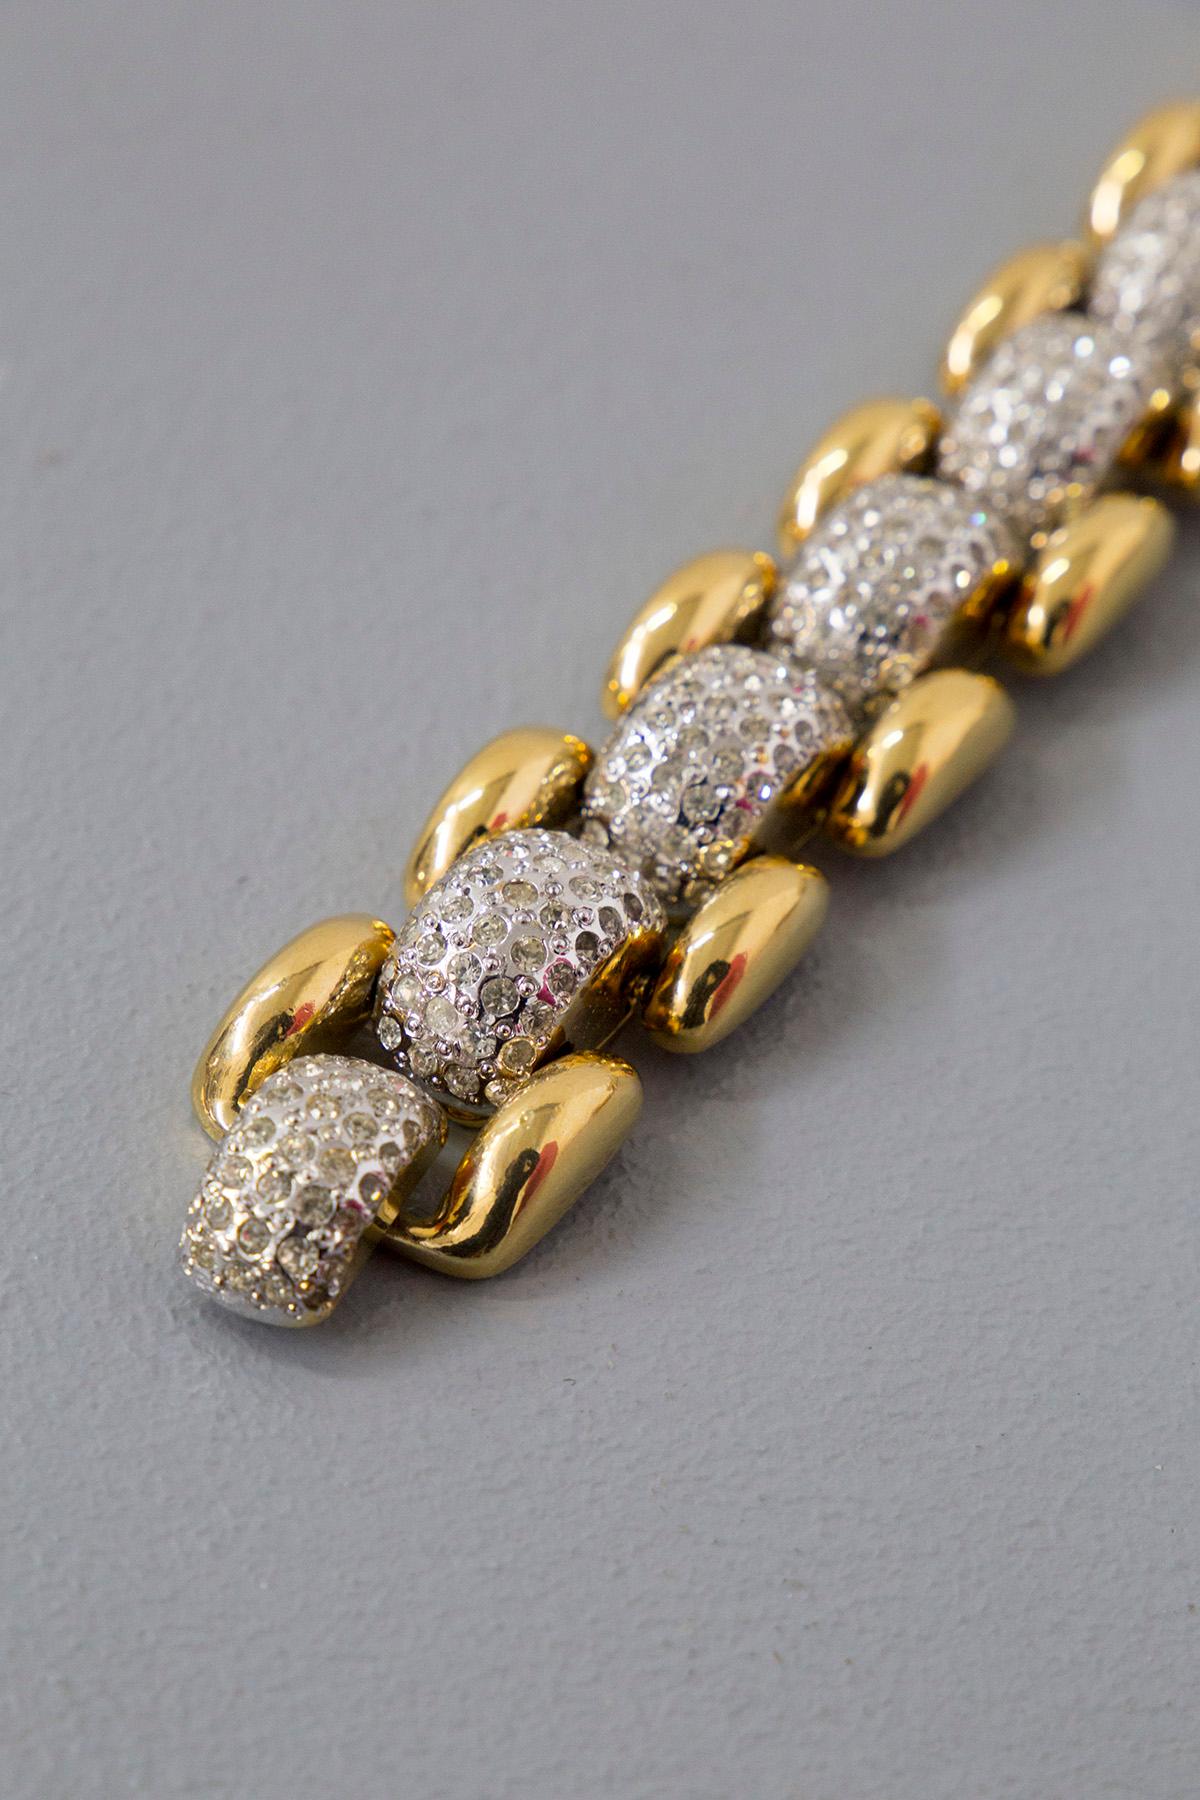 Modern Vintage Yves Saint Laurent bracelet in gold-plated metal